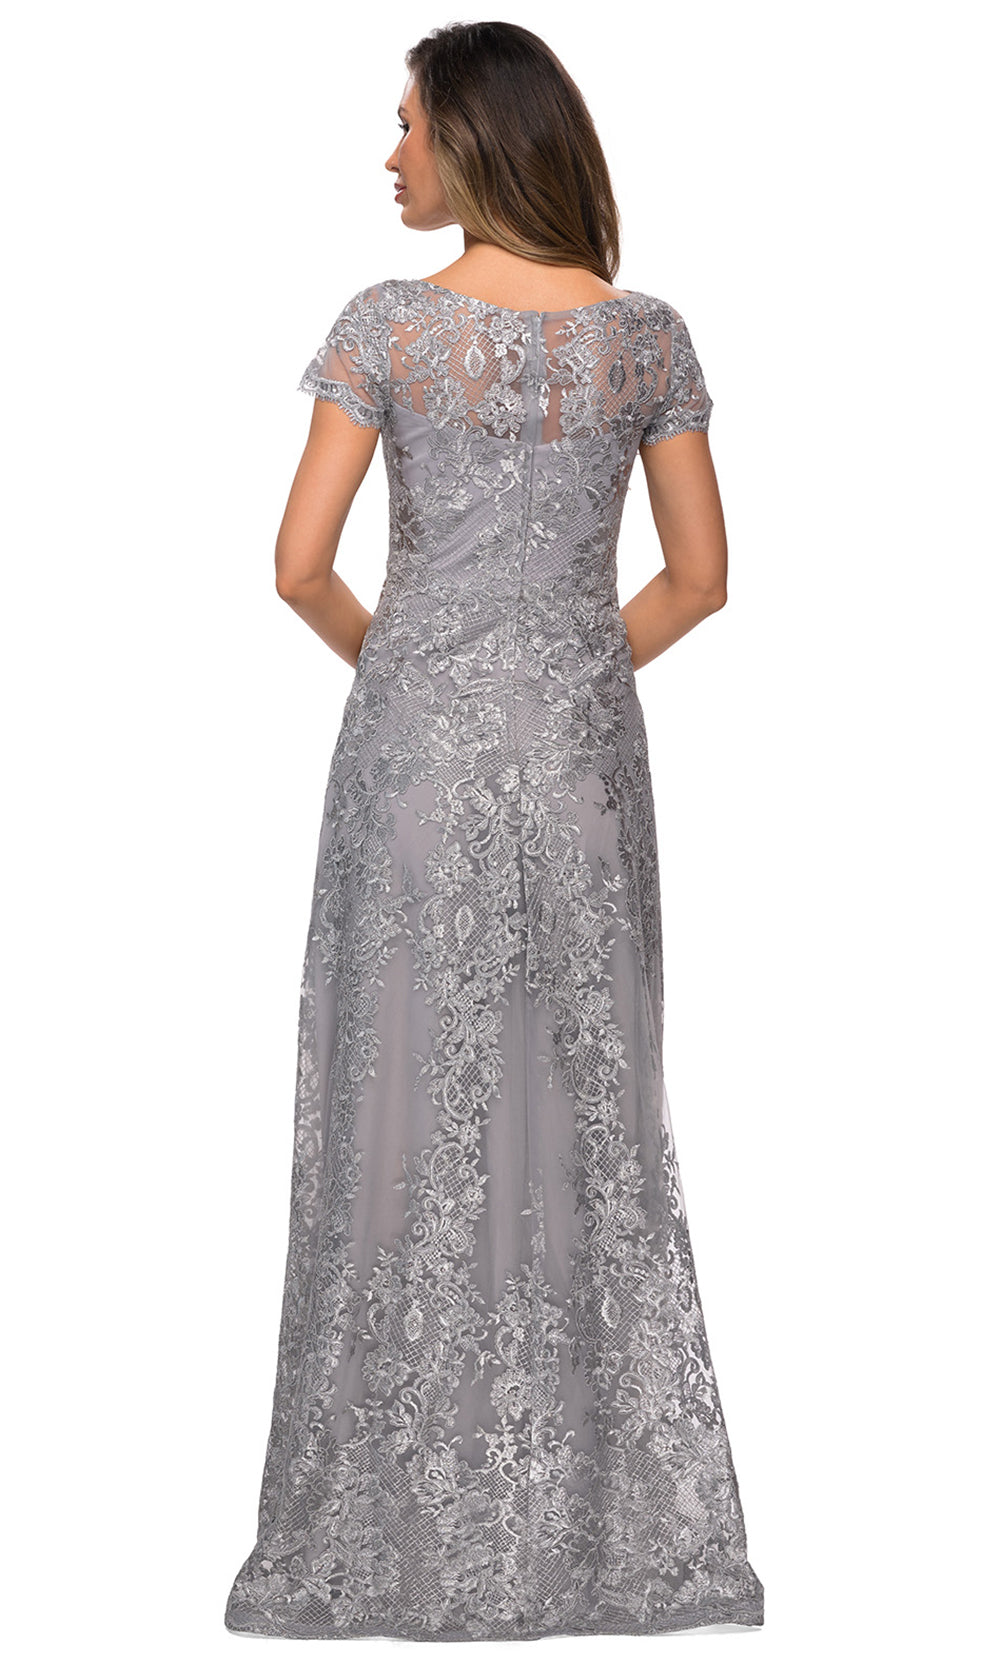 La Femme - 27935 Sheer Neckline Short Sleeve Lattice Lace A-Line Gown In Silver & Gray